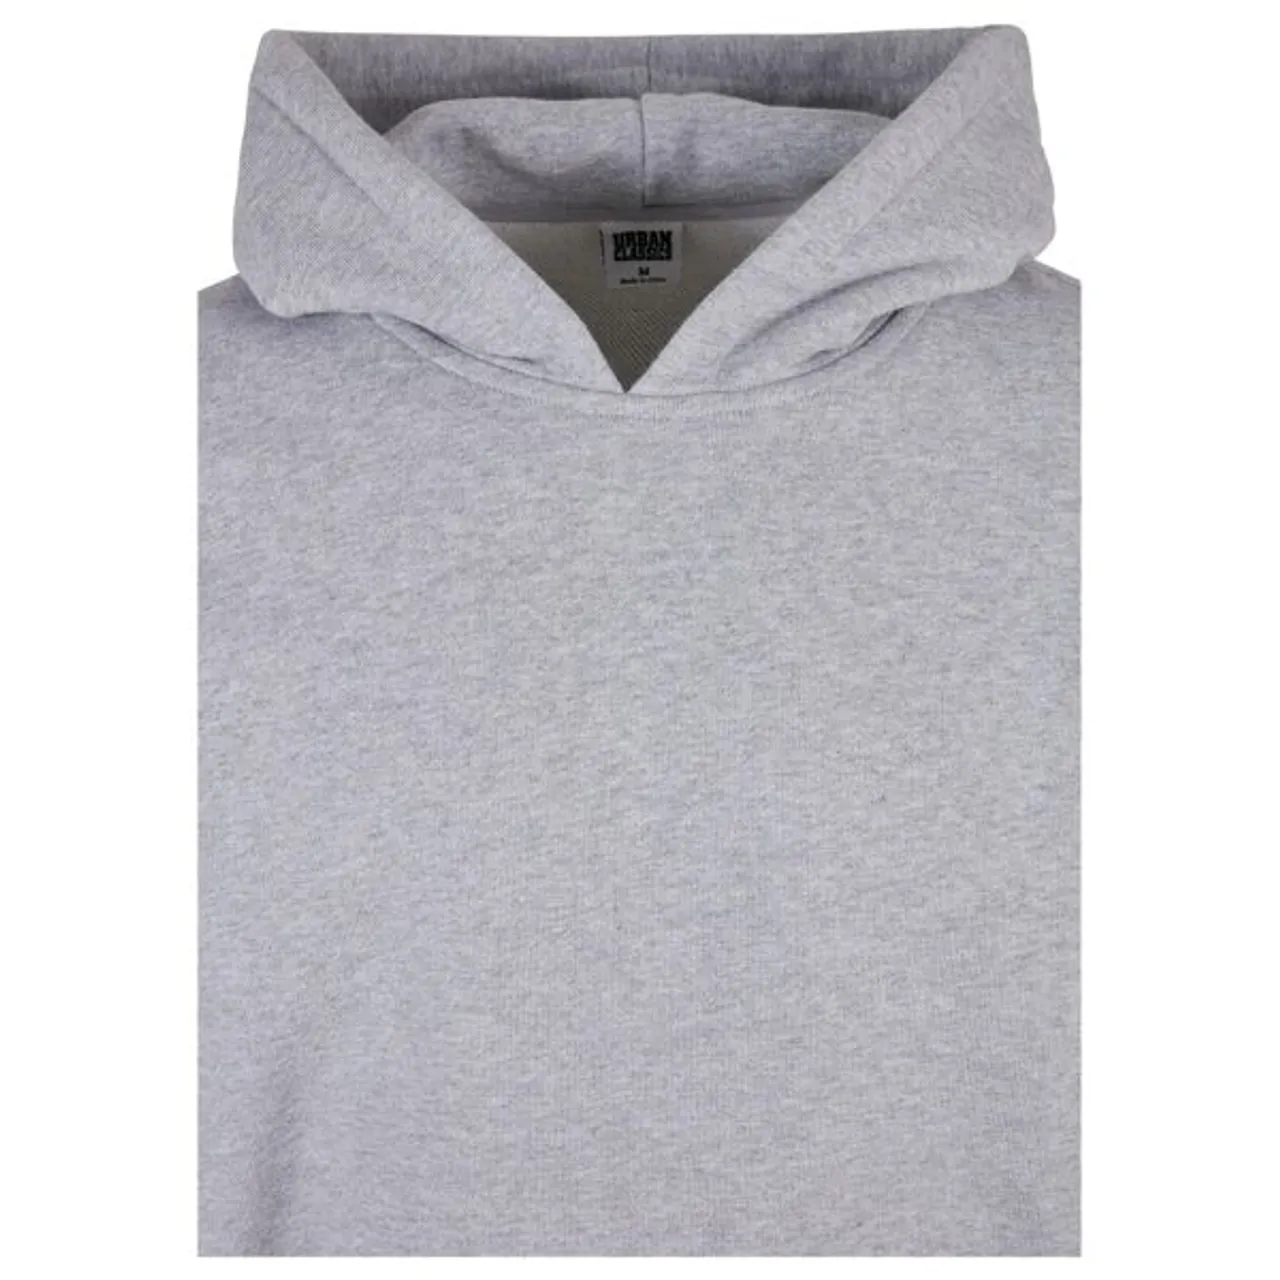 Sweatshirt URBAN CLASSICS "Urban Classics Herren Ultra Heavy Hoody" Gr. M, grau (grey) Herren Sweatshirts